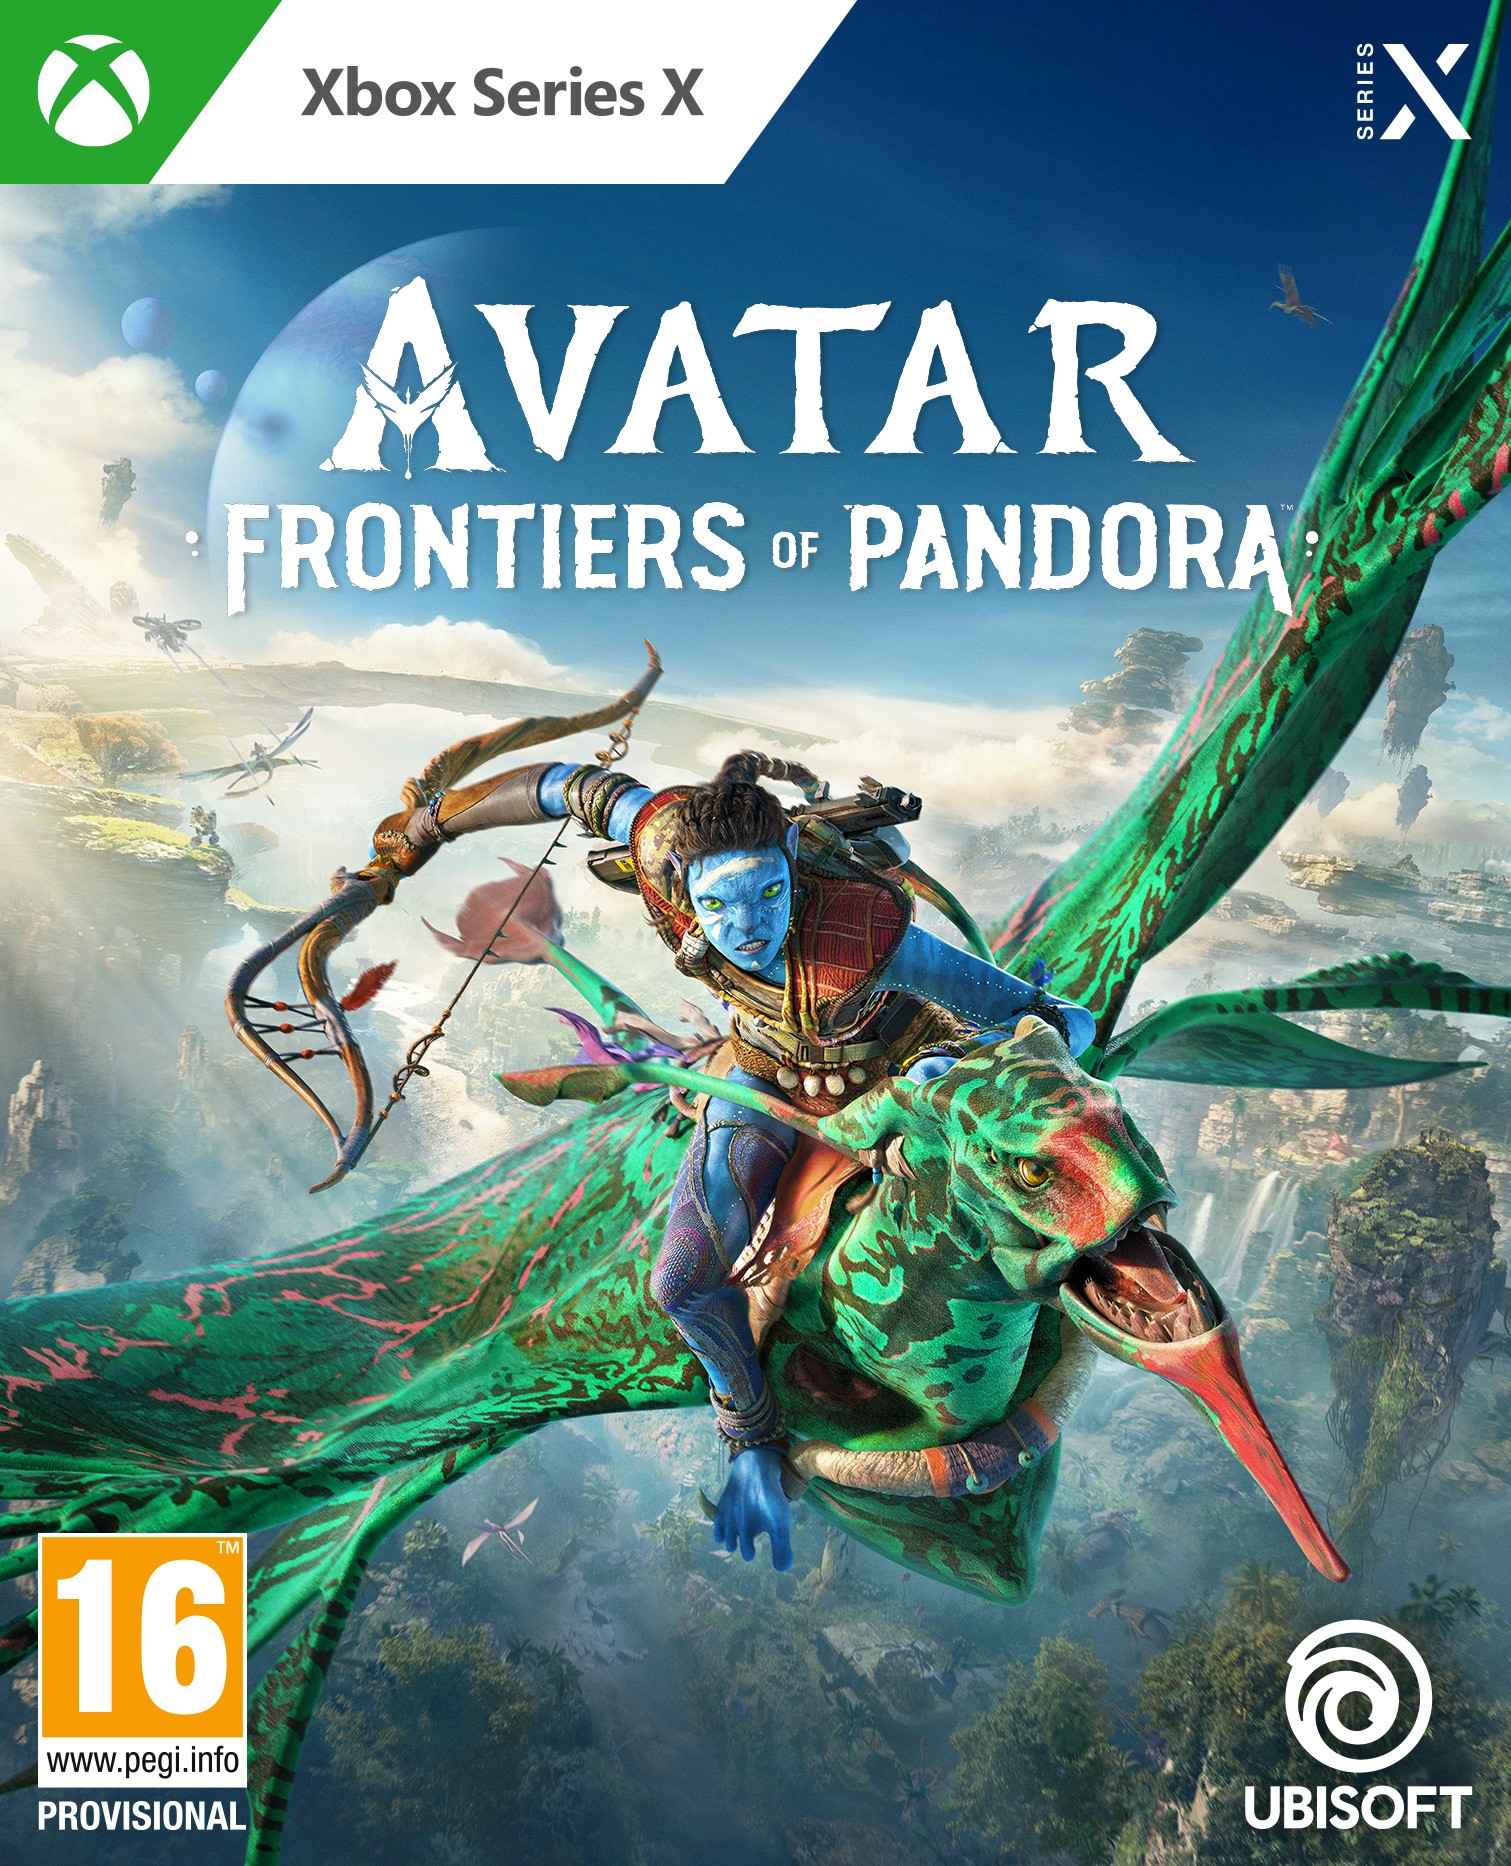 Avatar: Frontiers of Pandora + Preorder Bonus